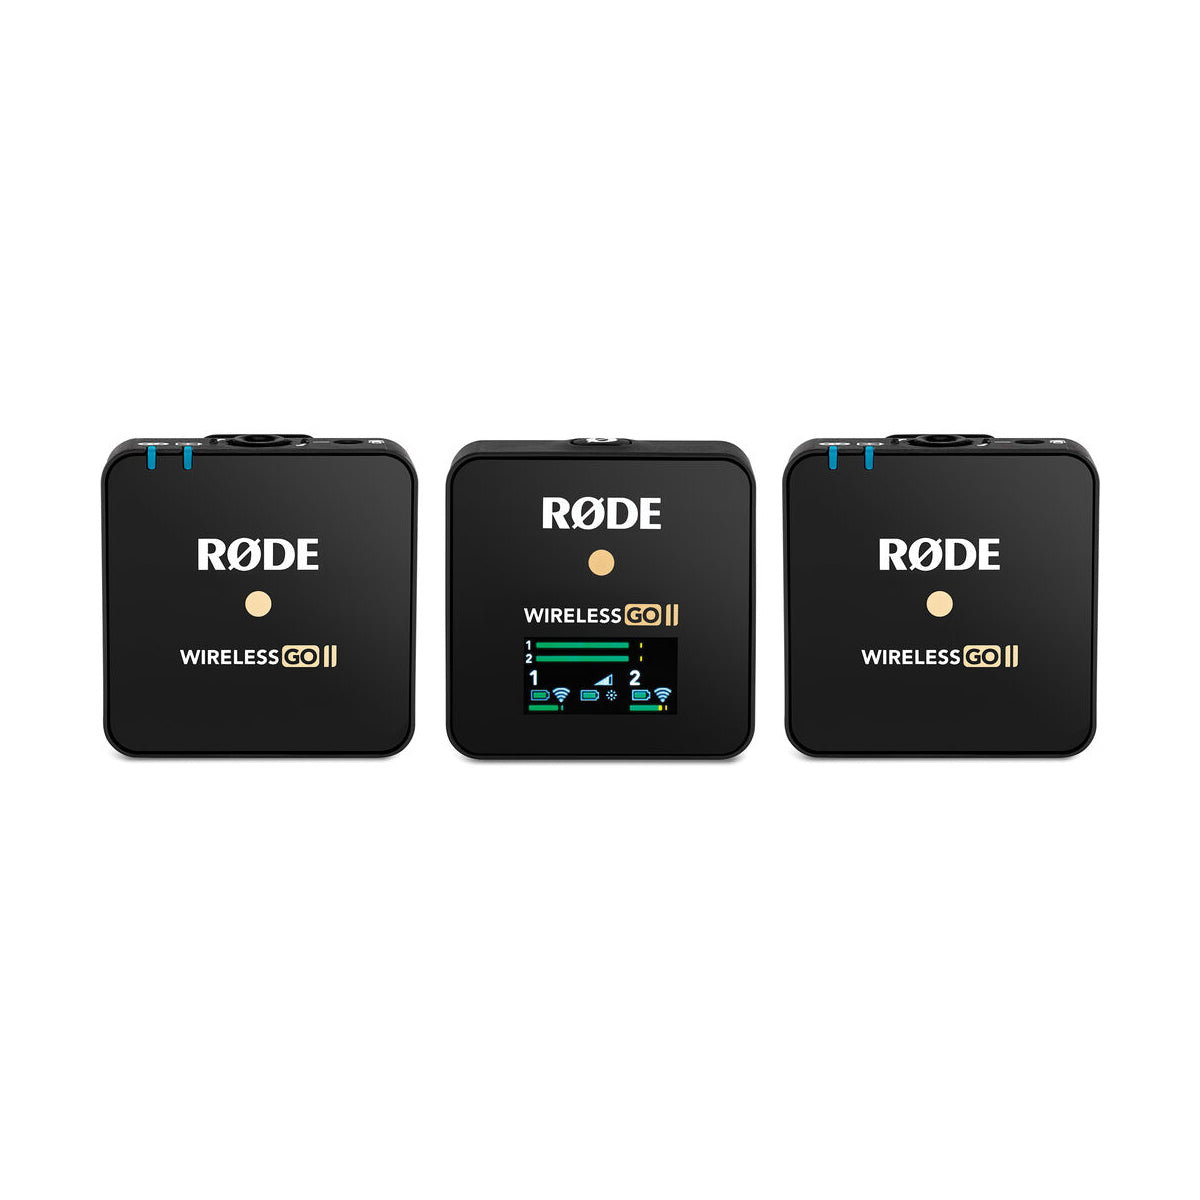 RODE Wireless GO II 2-Person Digital Wireless Microphone Kit